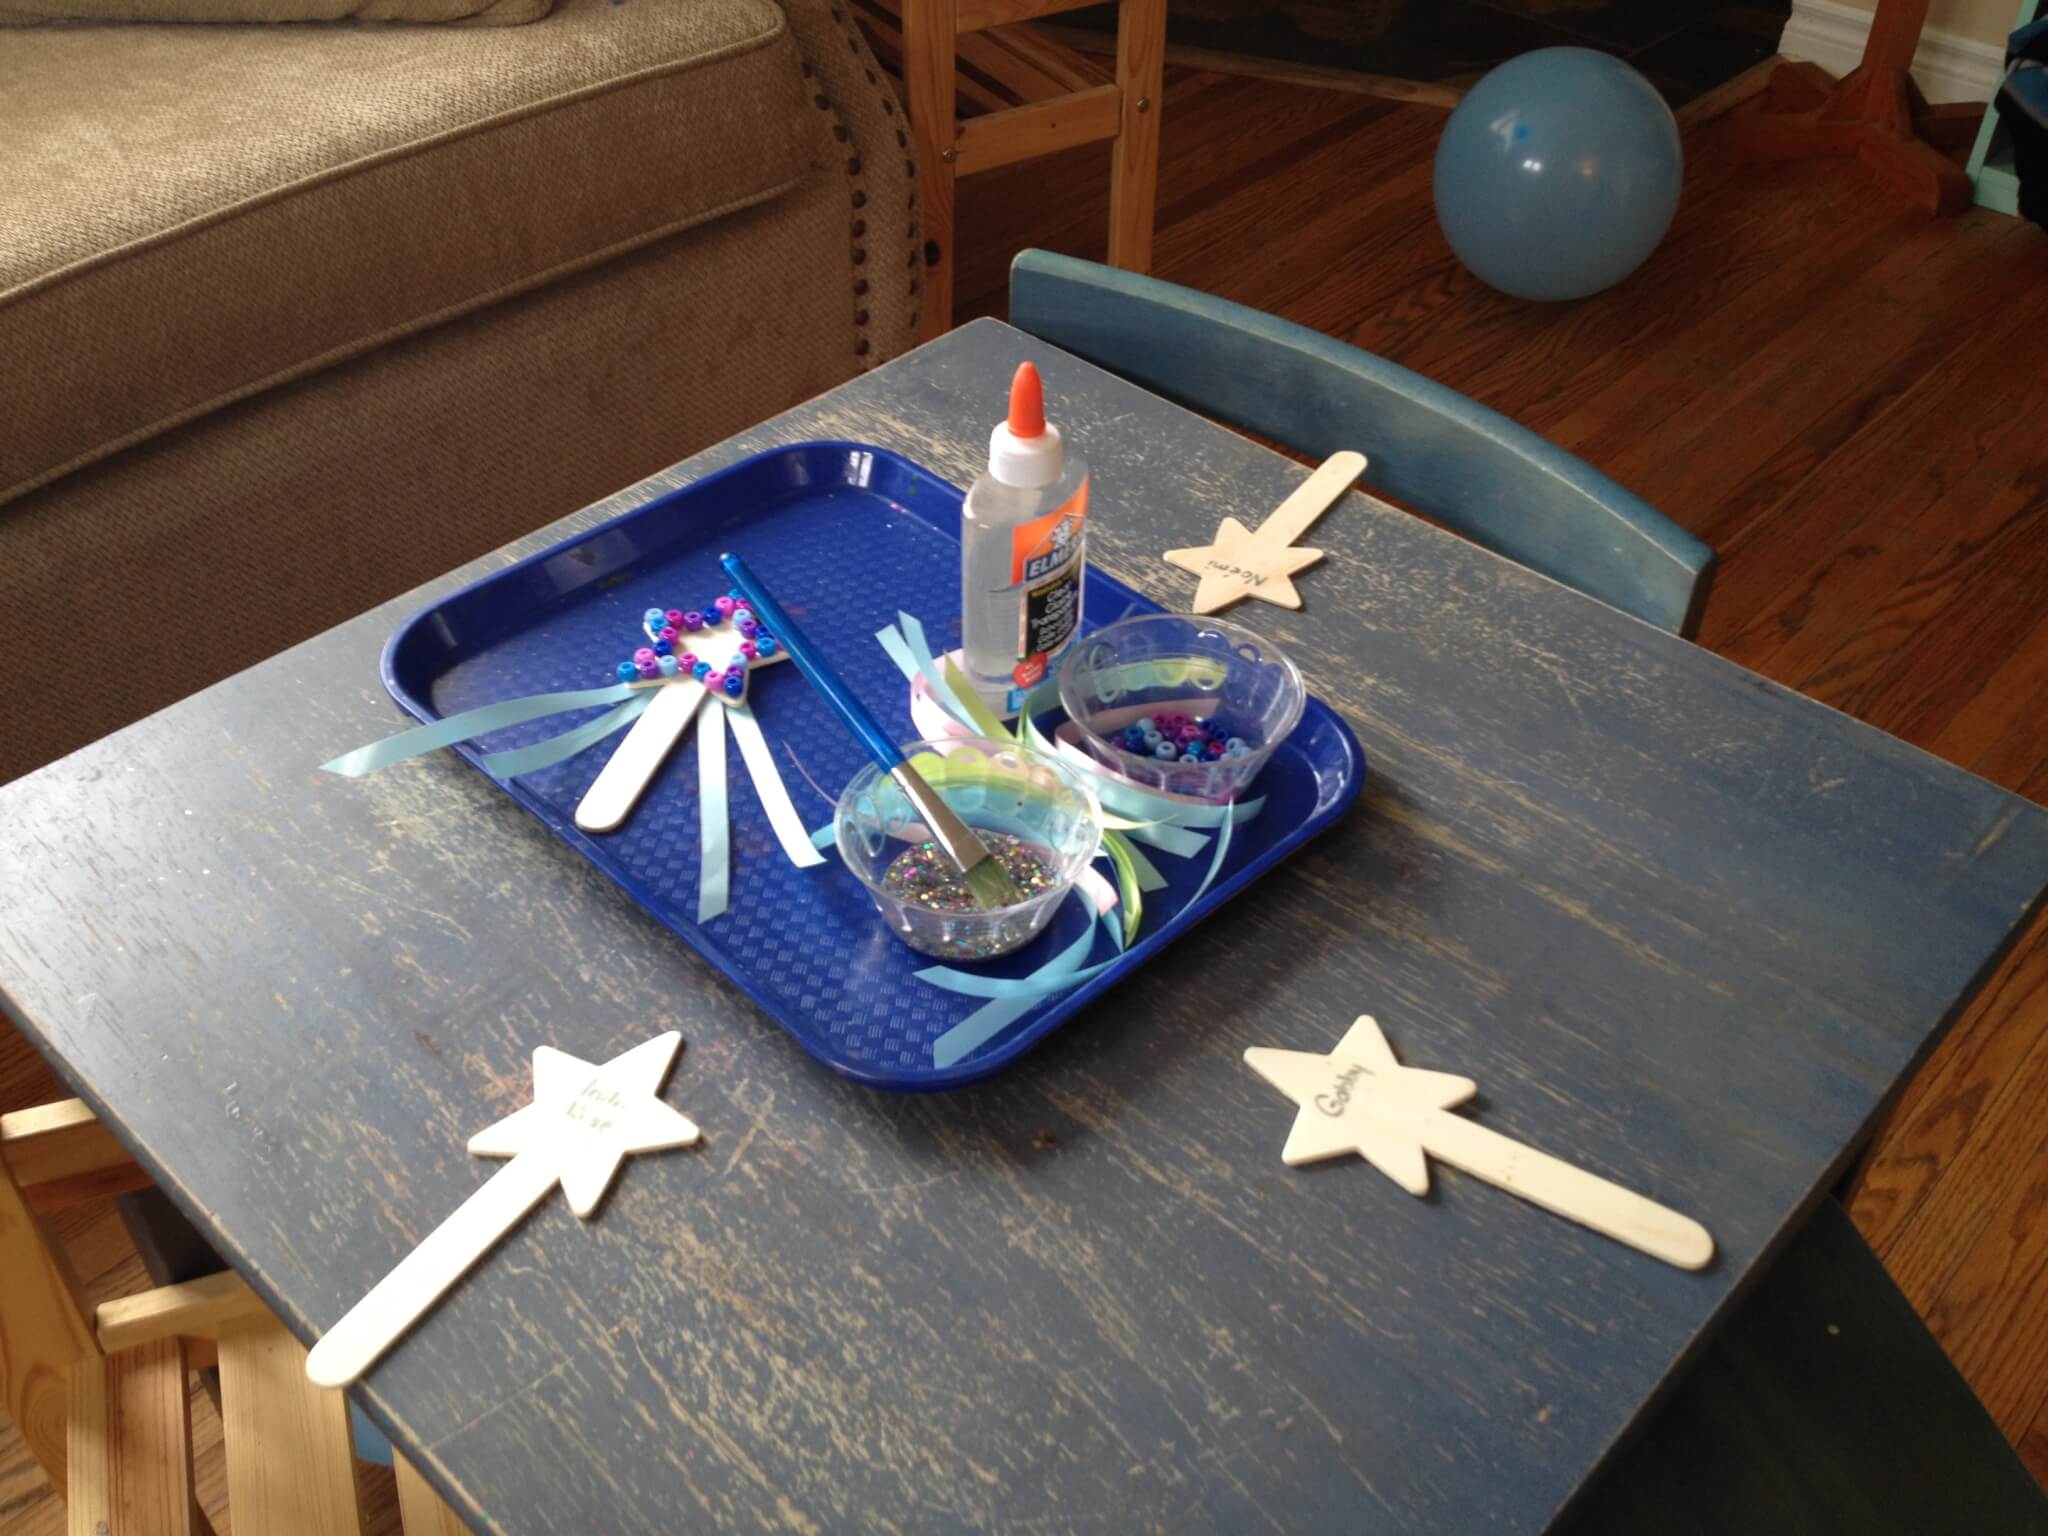 Invitation to create: Elsa wand craft for kids